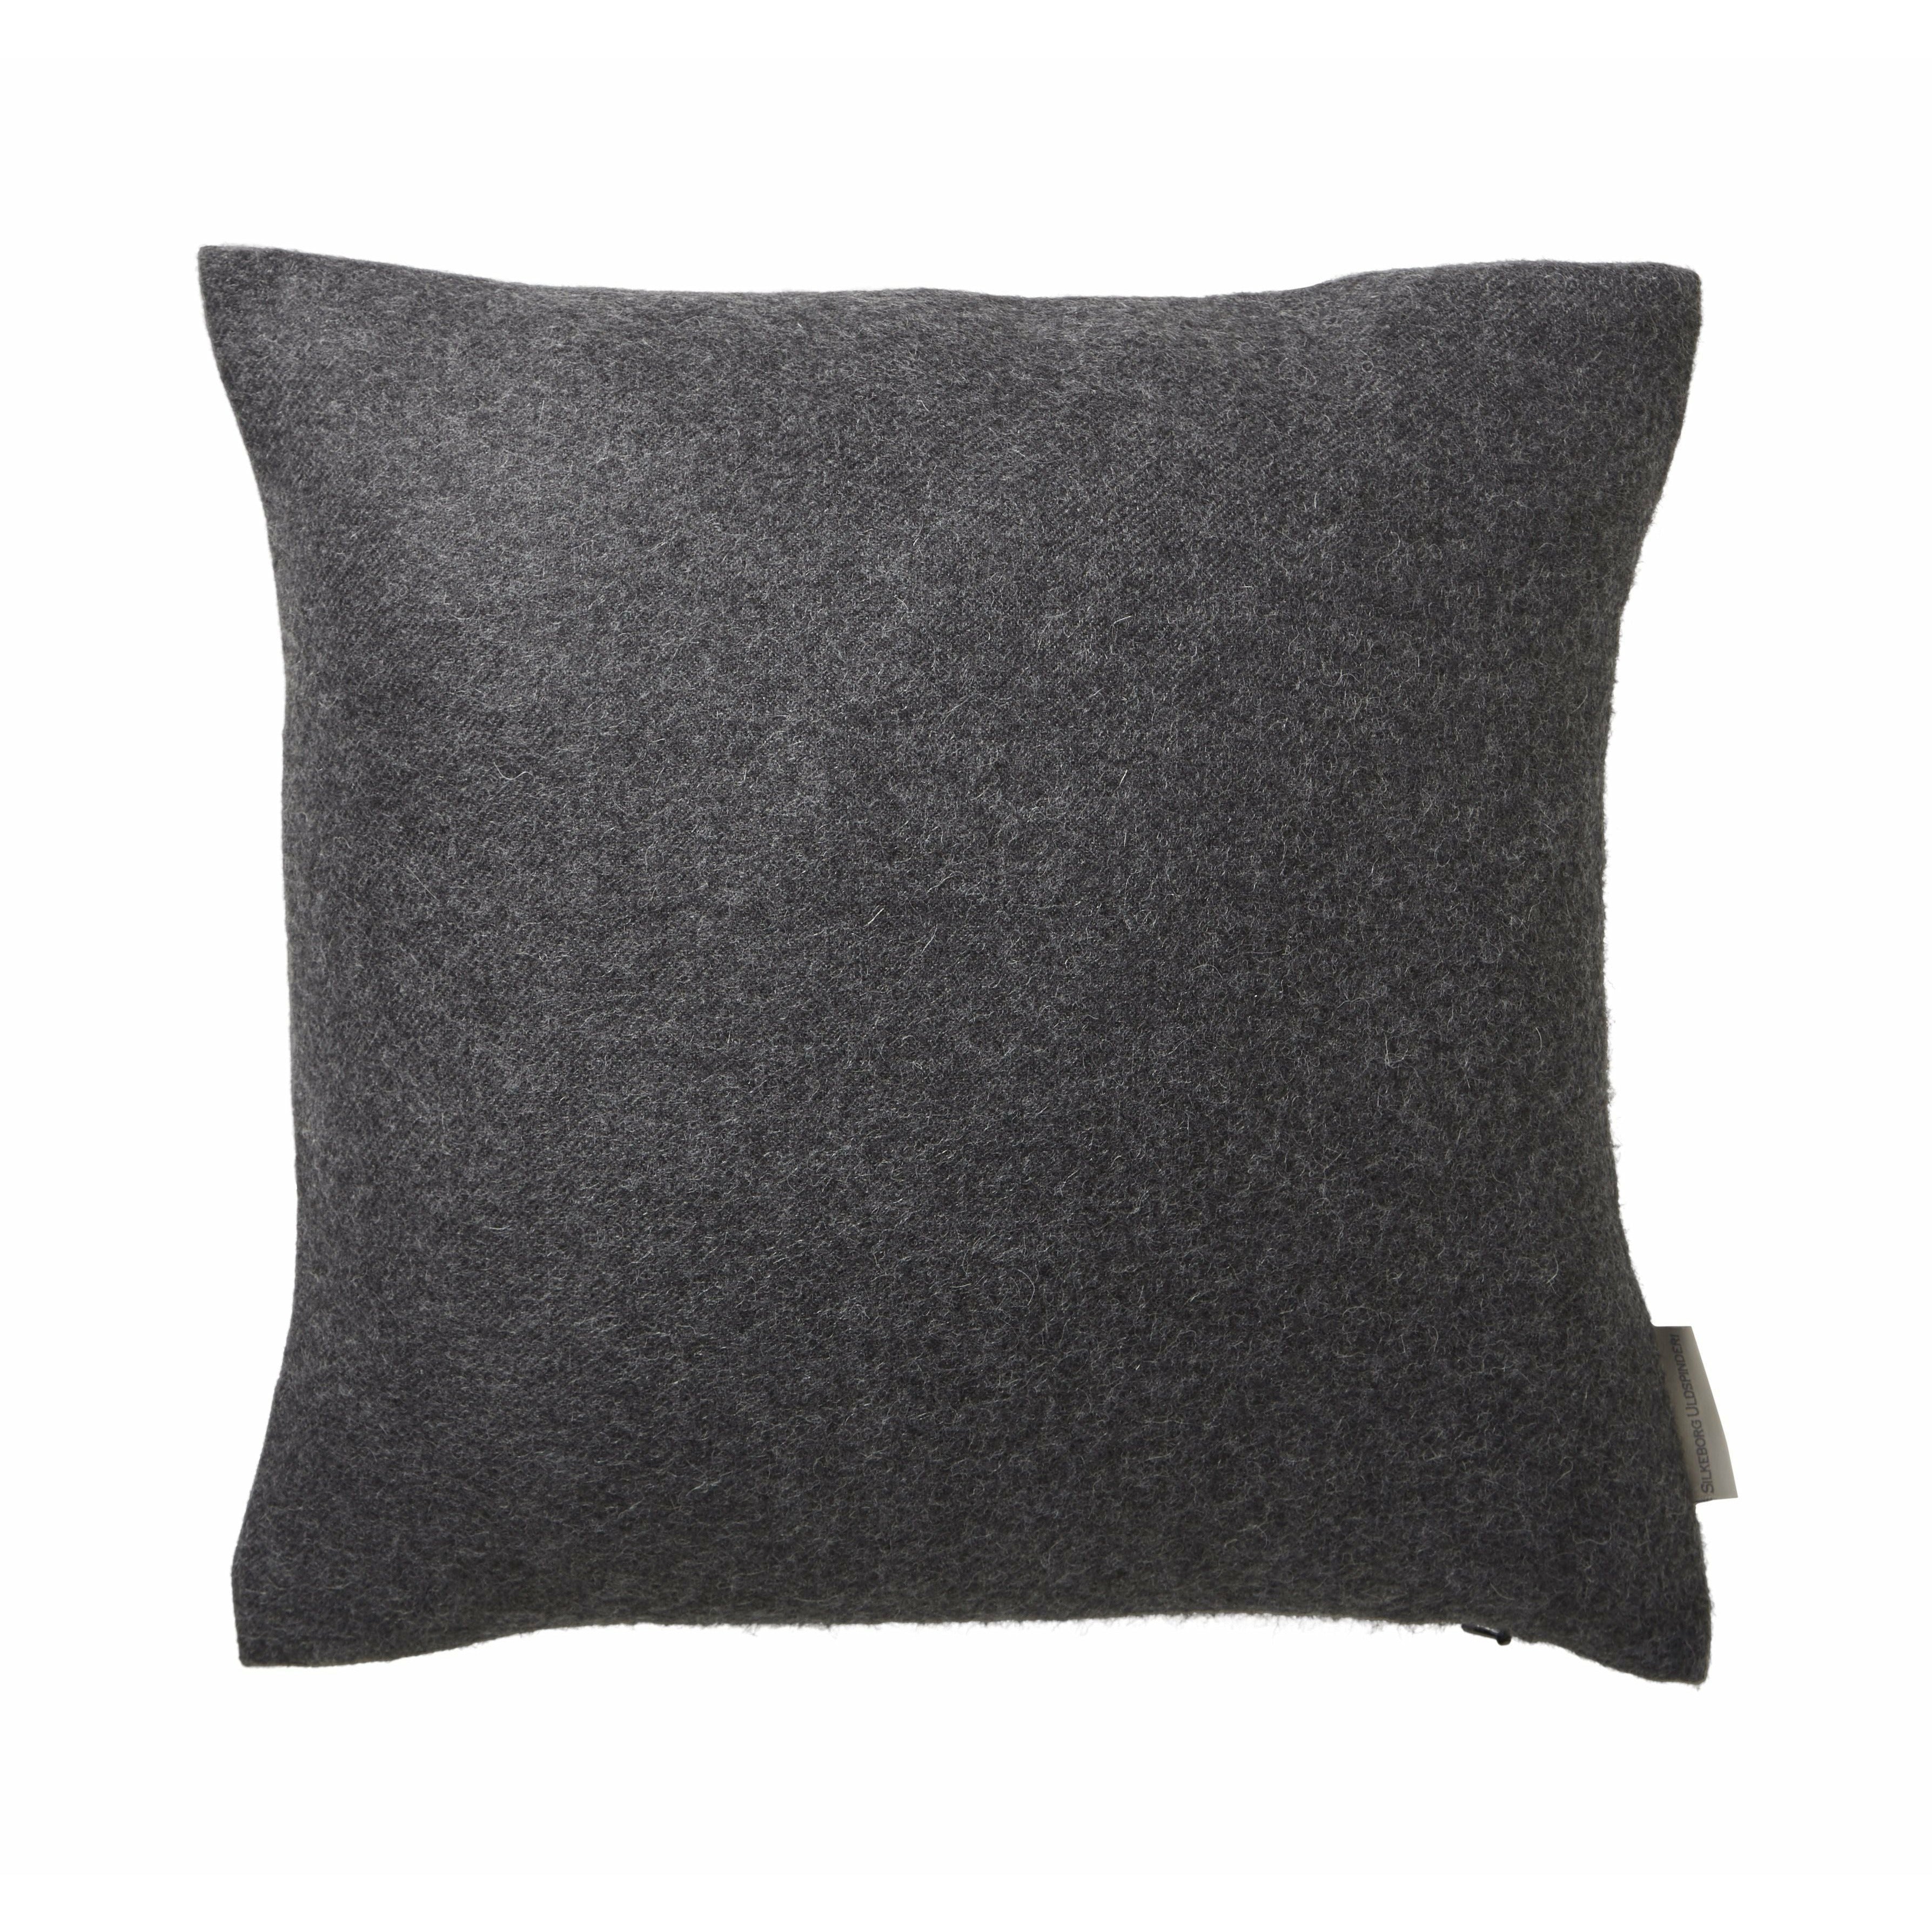 Silkorg Uldspinderi Arequipa Cushion 40 x40 cm, gris oscuro